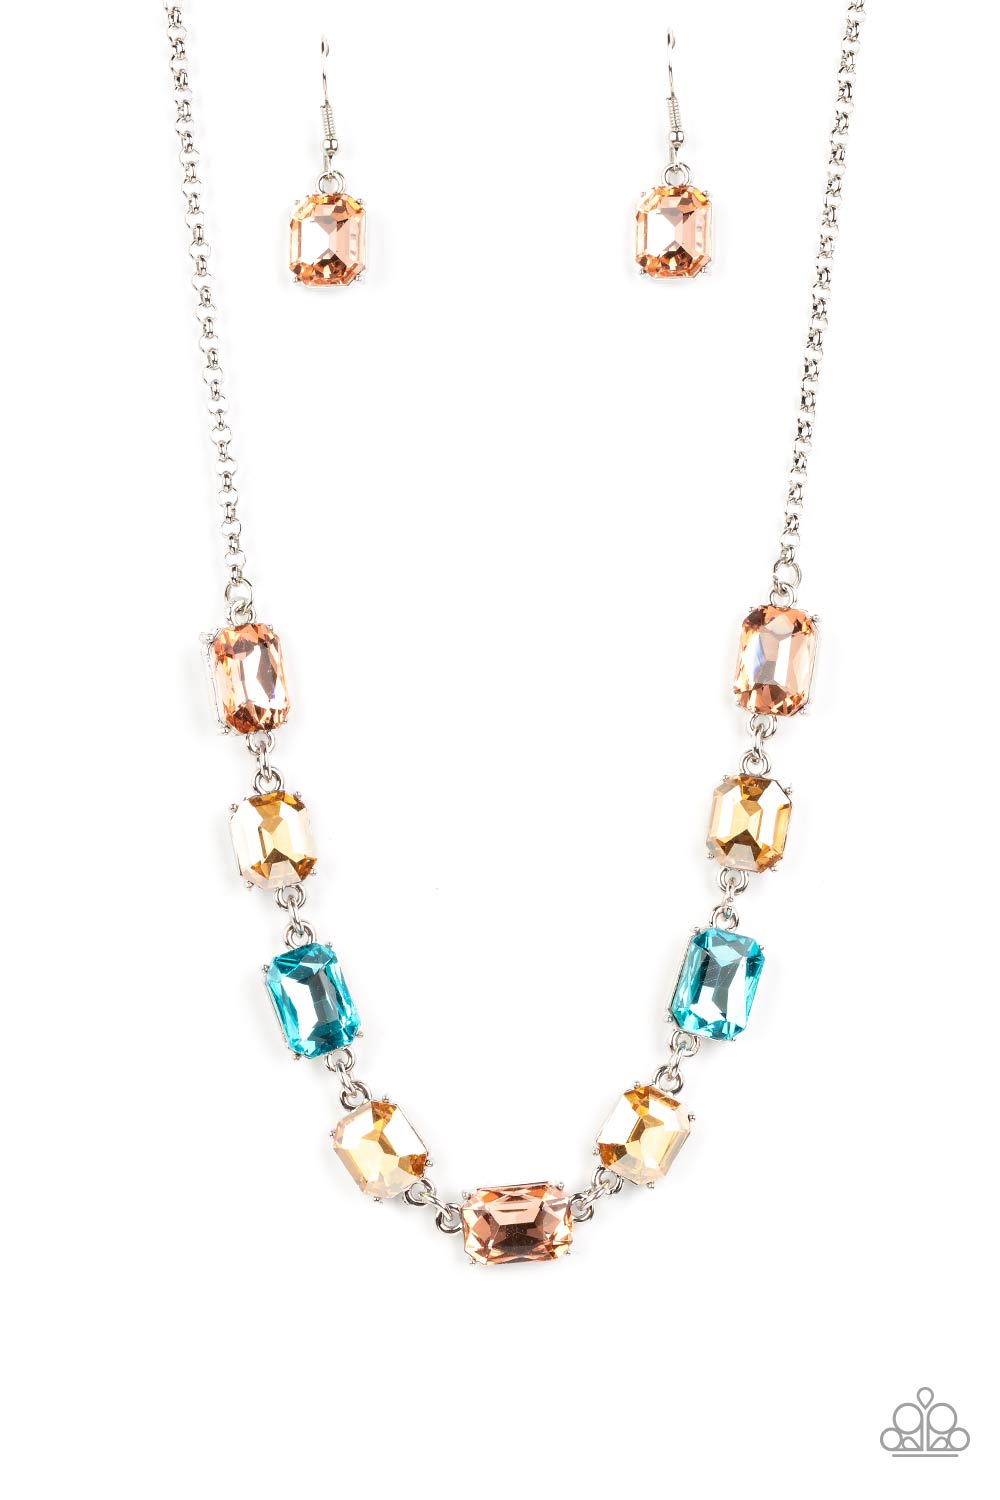 Emerald Envy Multi Rhinestone Necklace - Paparazzi Accessories- lightbox - CarasShop.com - $5 Jewelry by Cara Jewels